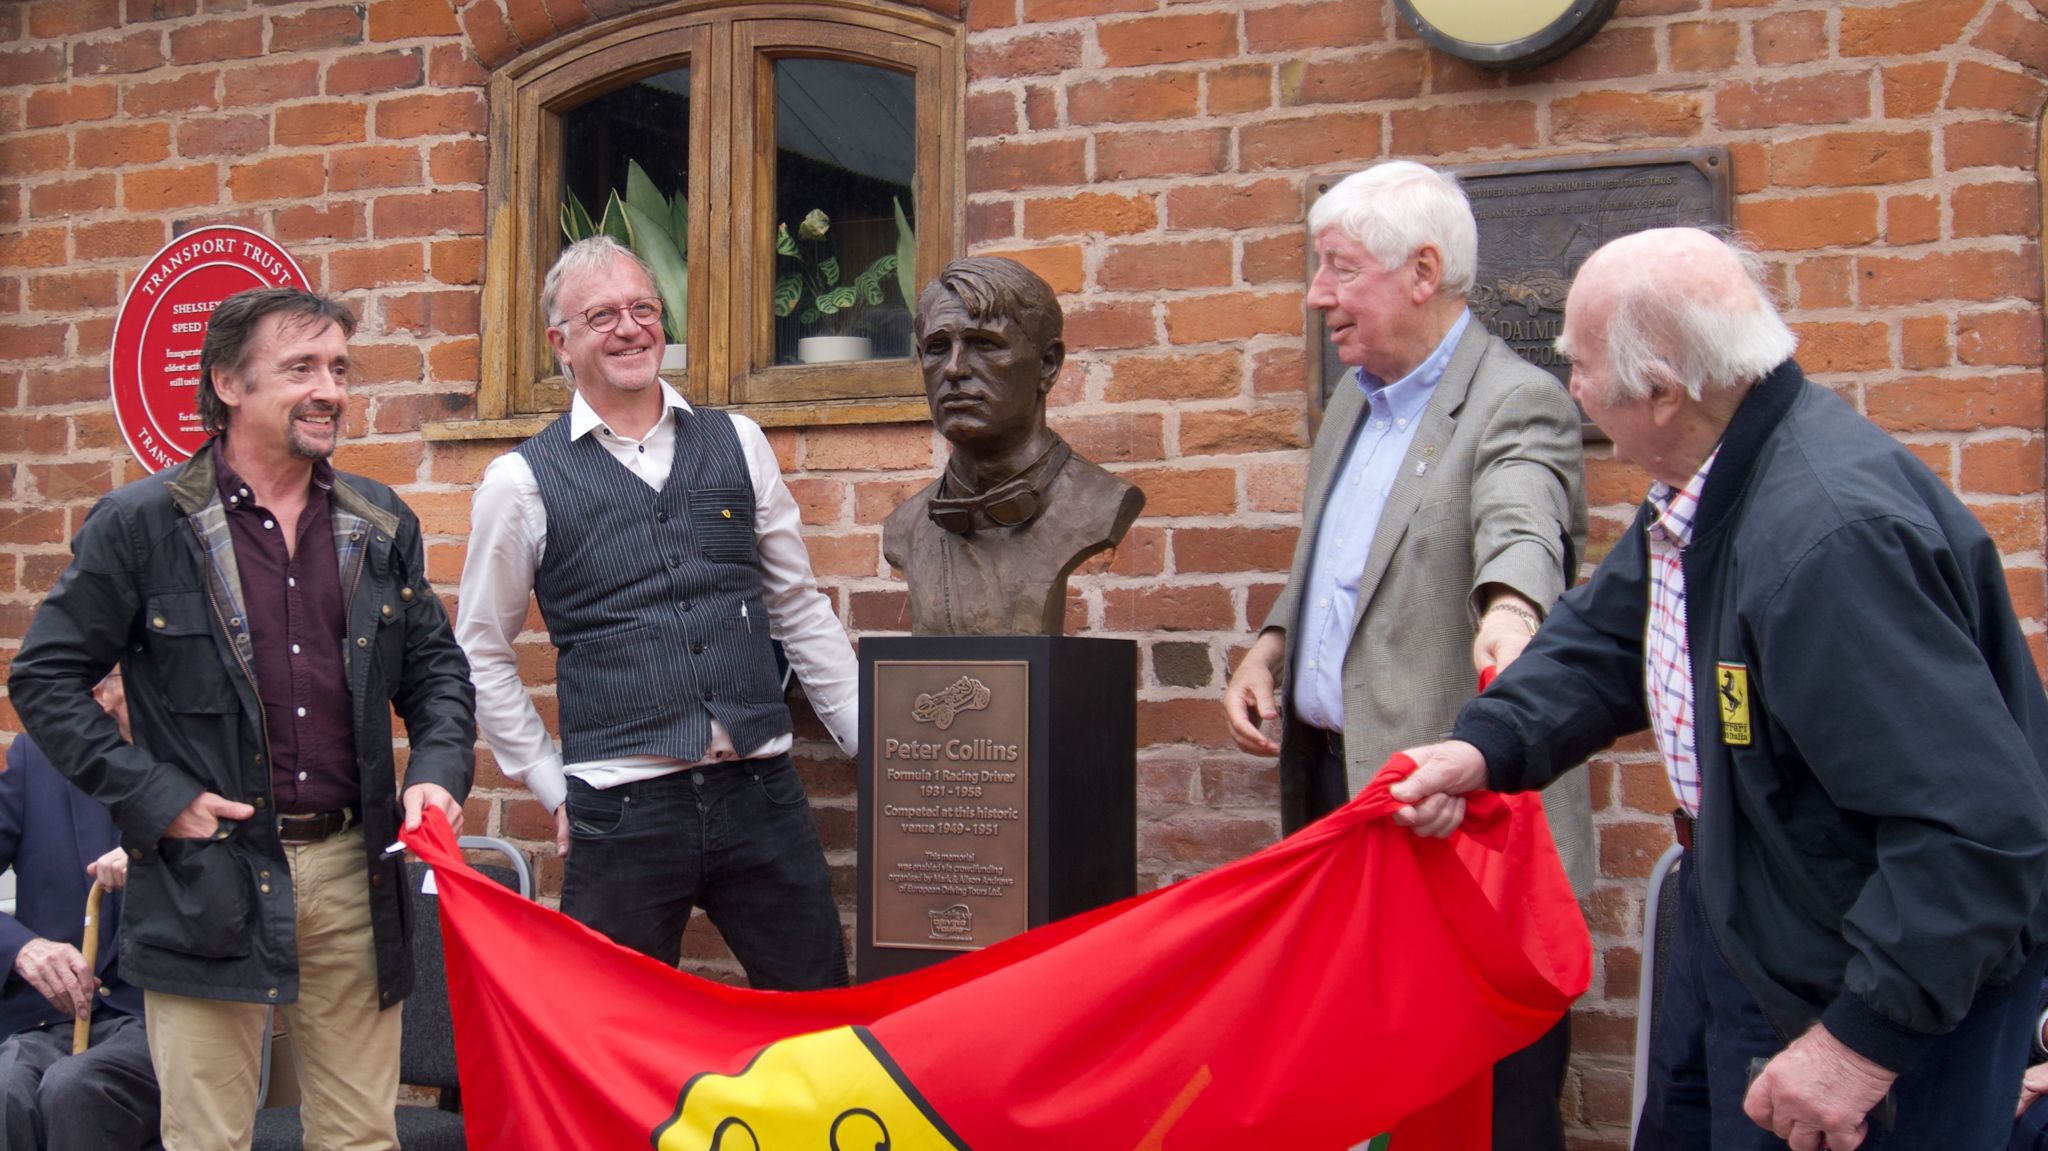 Peter Collins memorial unveiled